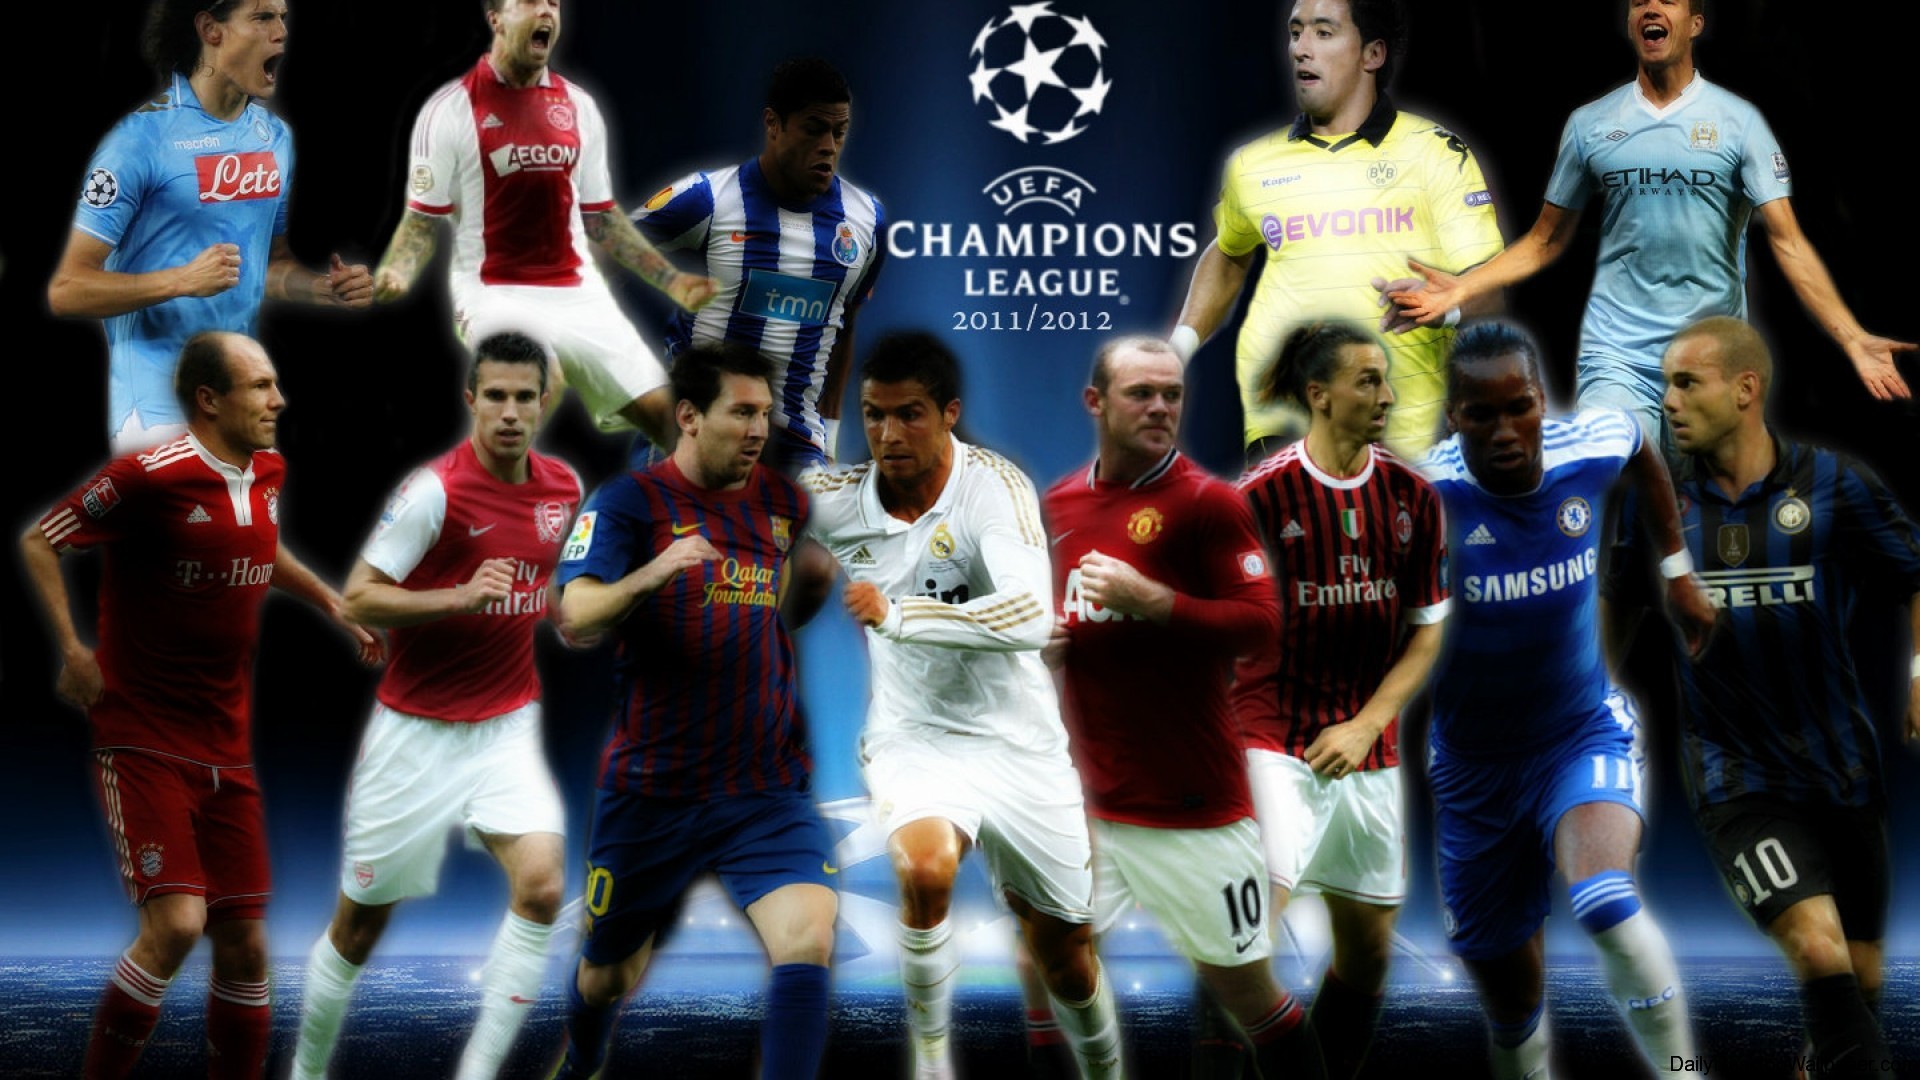 1920x1080 Champions League Wallpaper